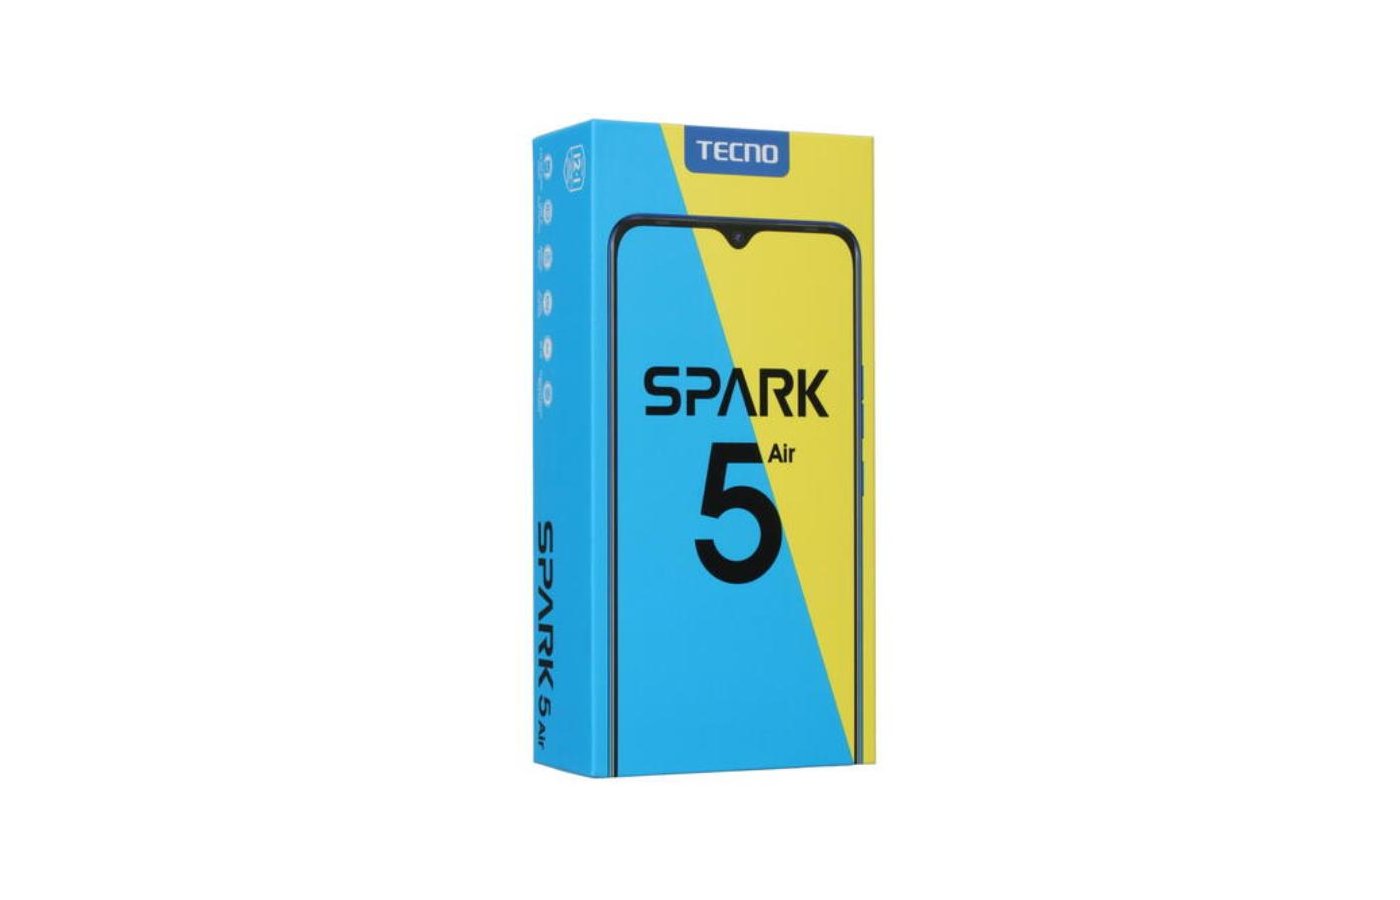 Техно 5 аир. Tecno Spark 5 Air, 2/32 ГБ. Смартфон Techno Spark 5 Air. Techno Spark 5 Air 32. Techno Spark 5 Air 32 ГБ.